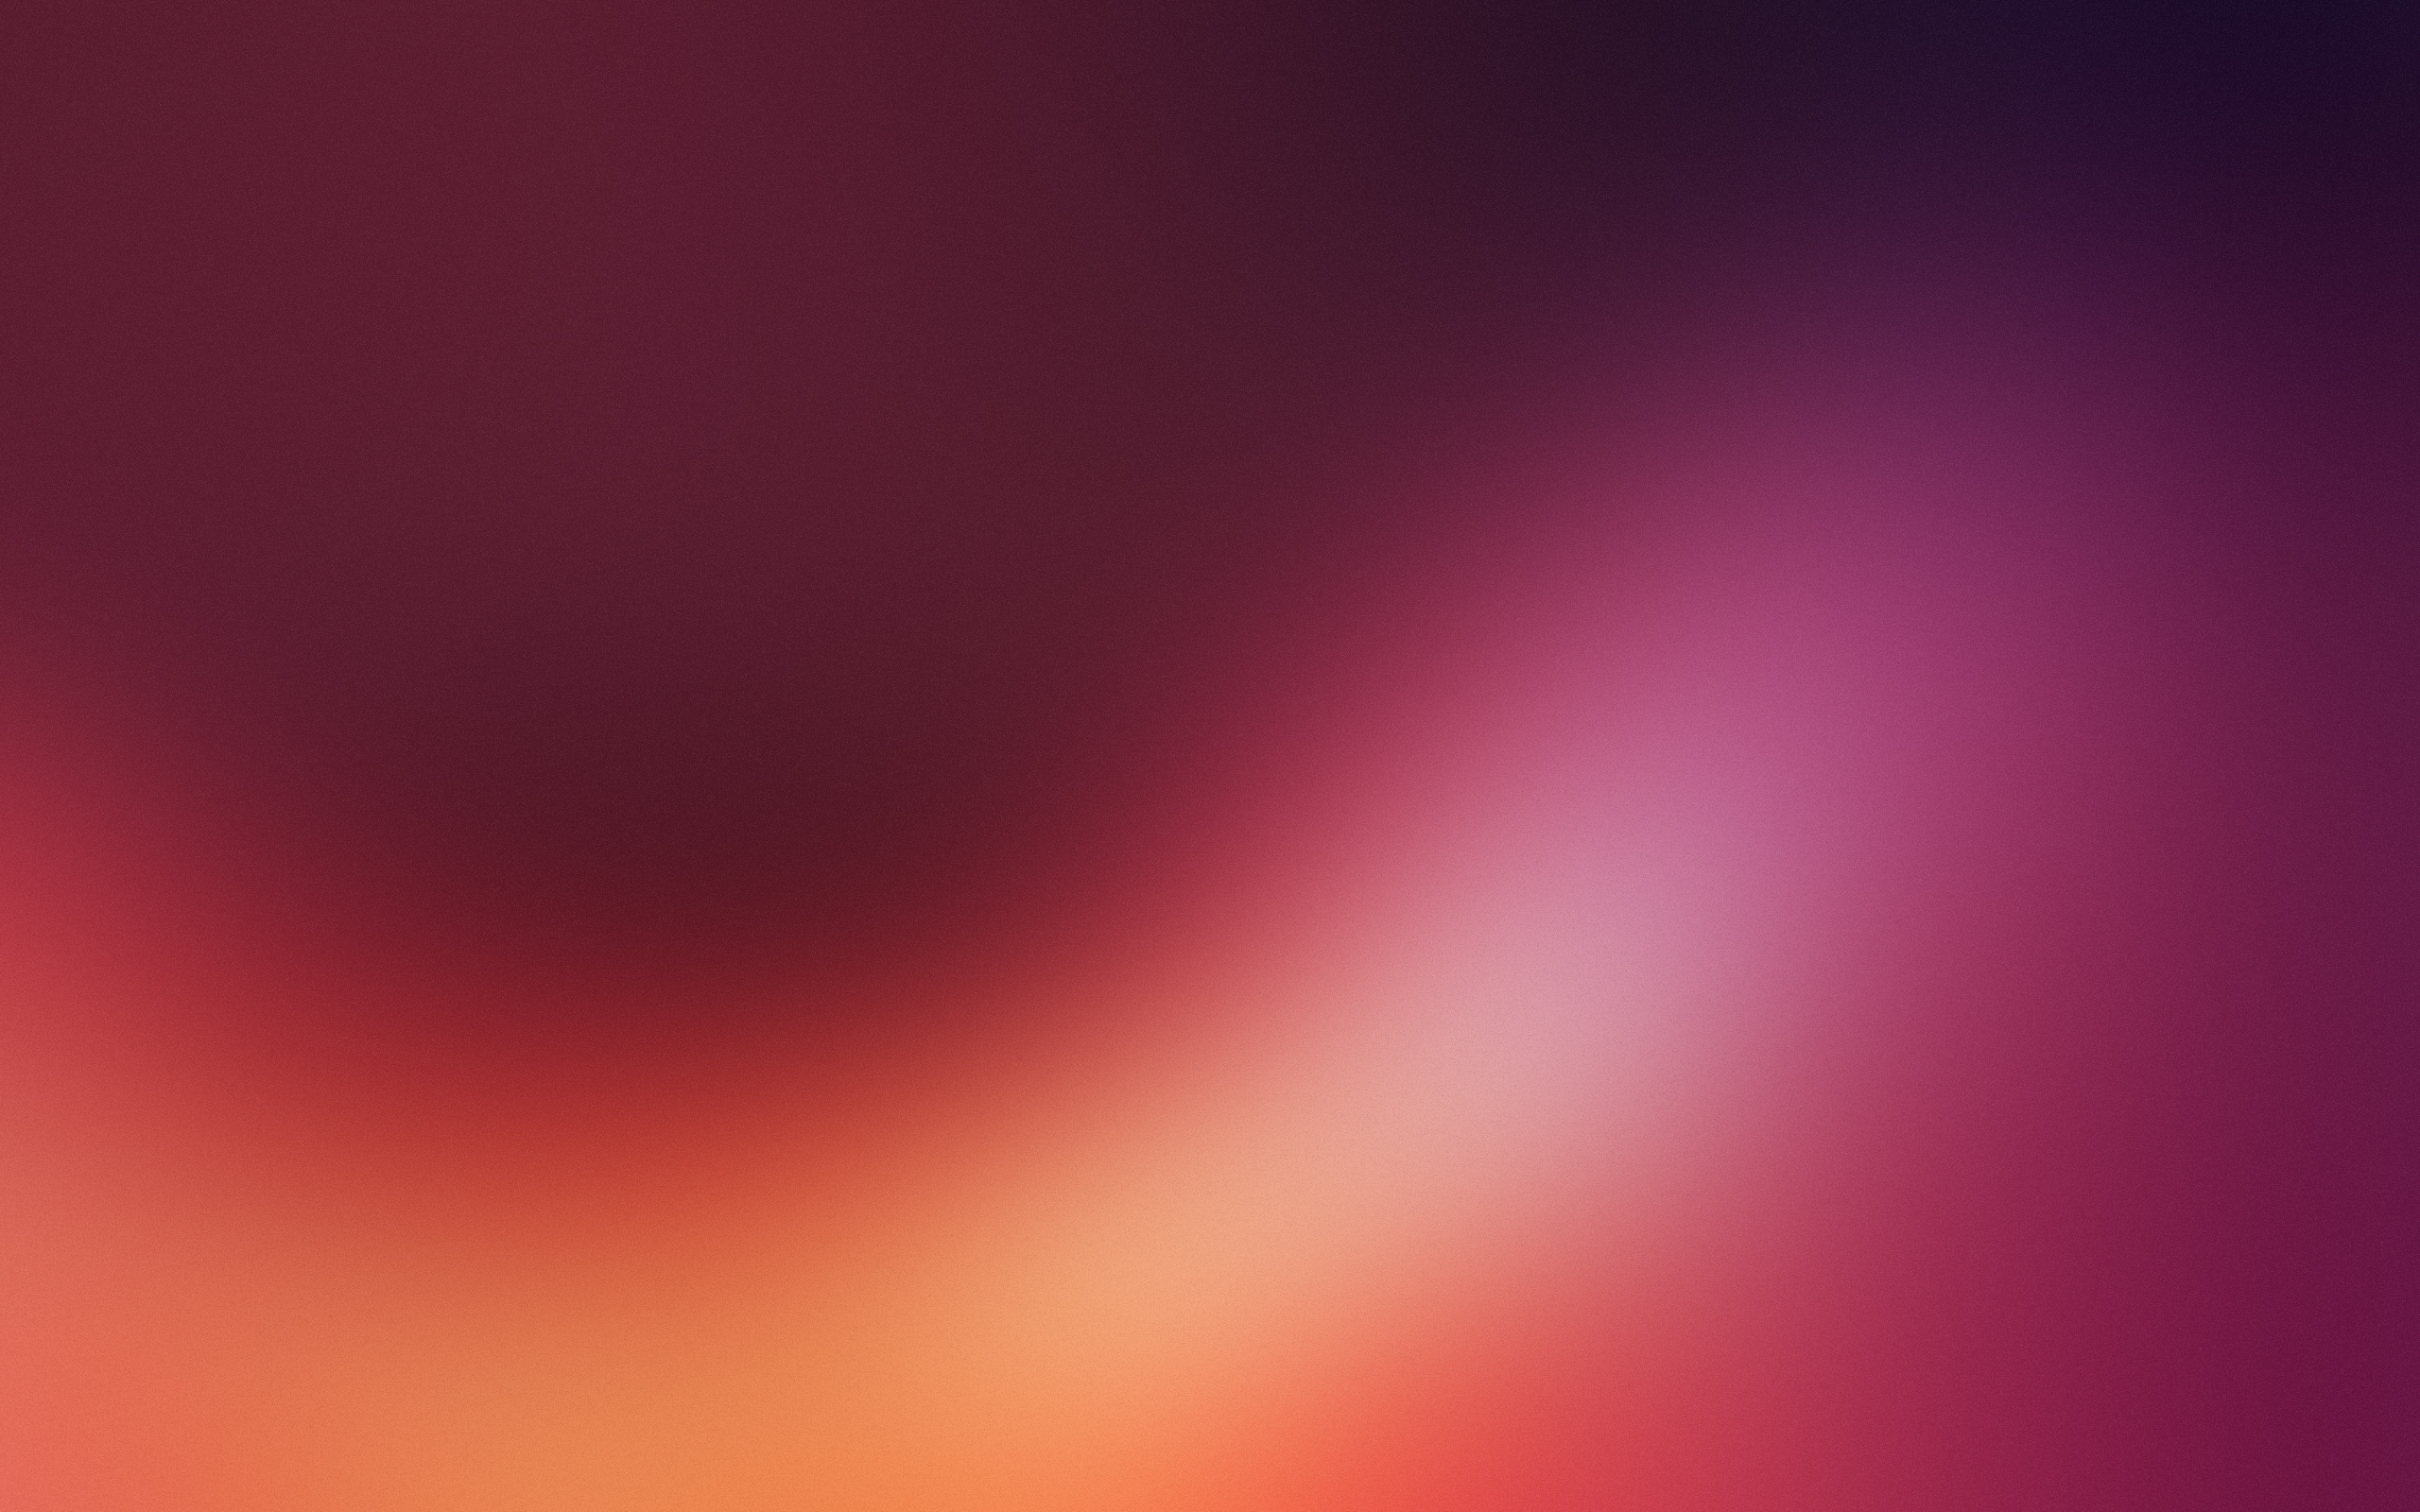 ubuntu wallpaper,himmel,rot,rosa,lila,blau